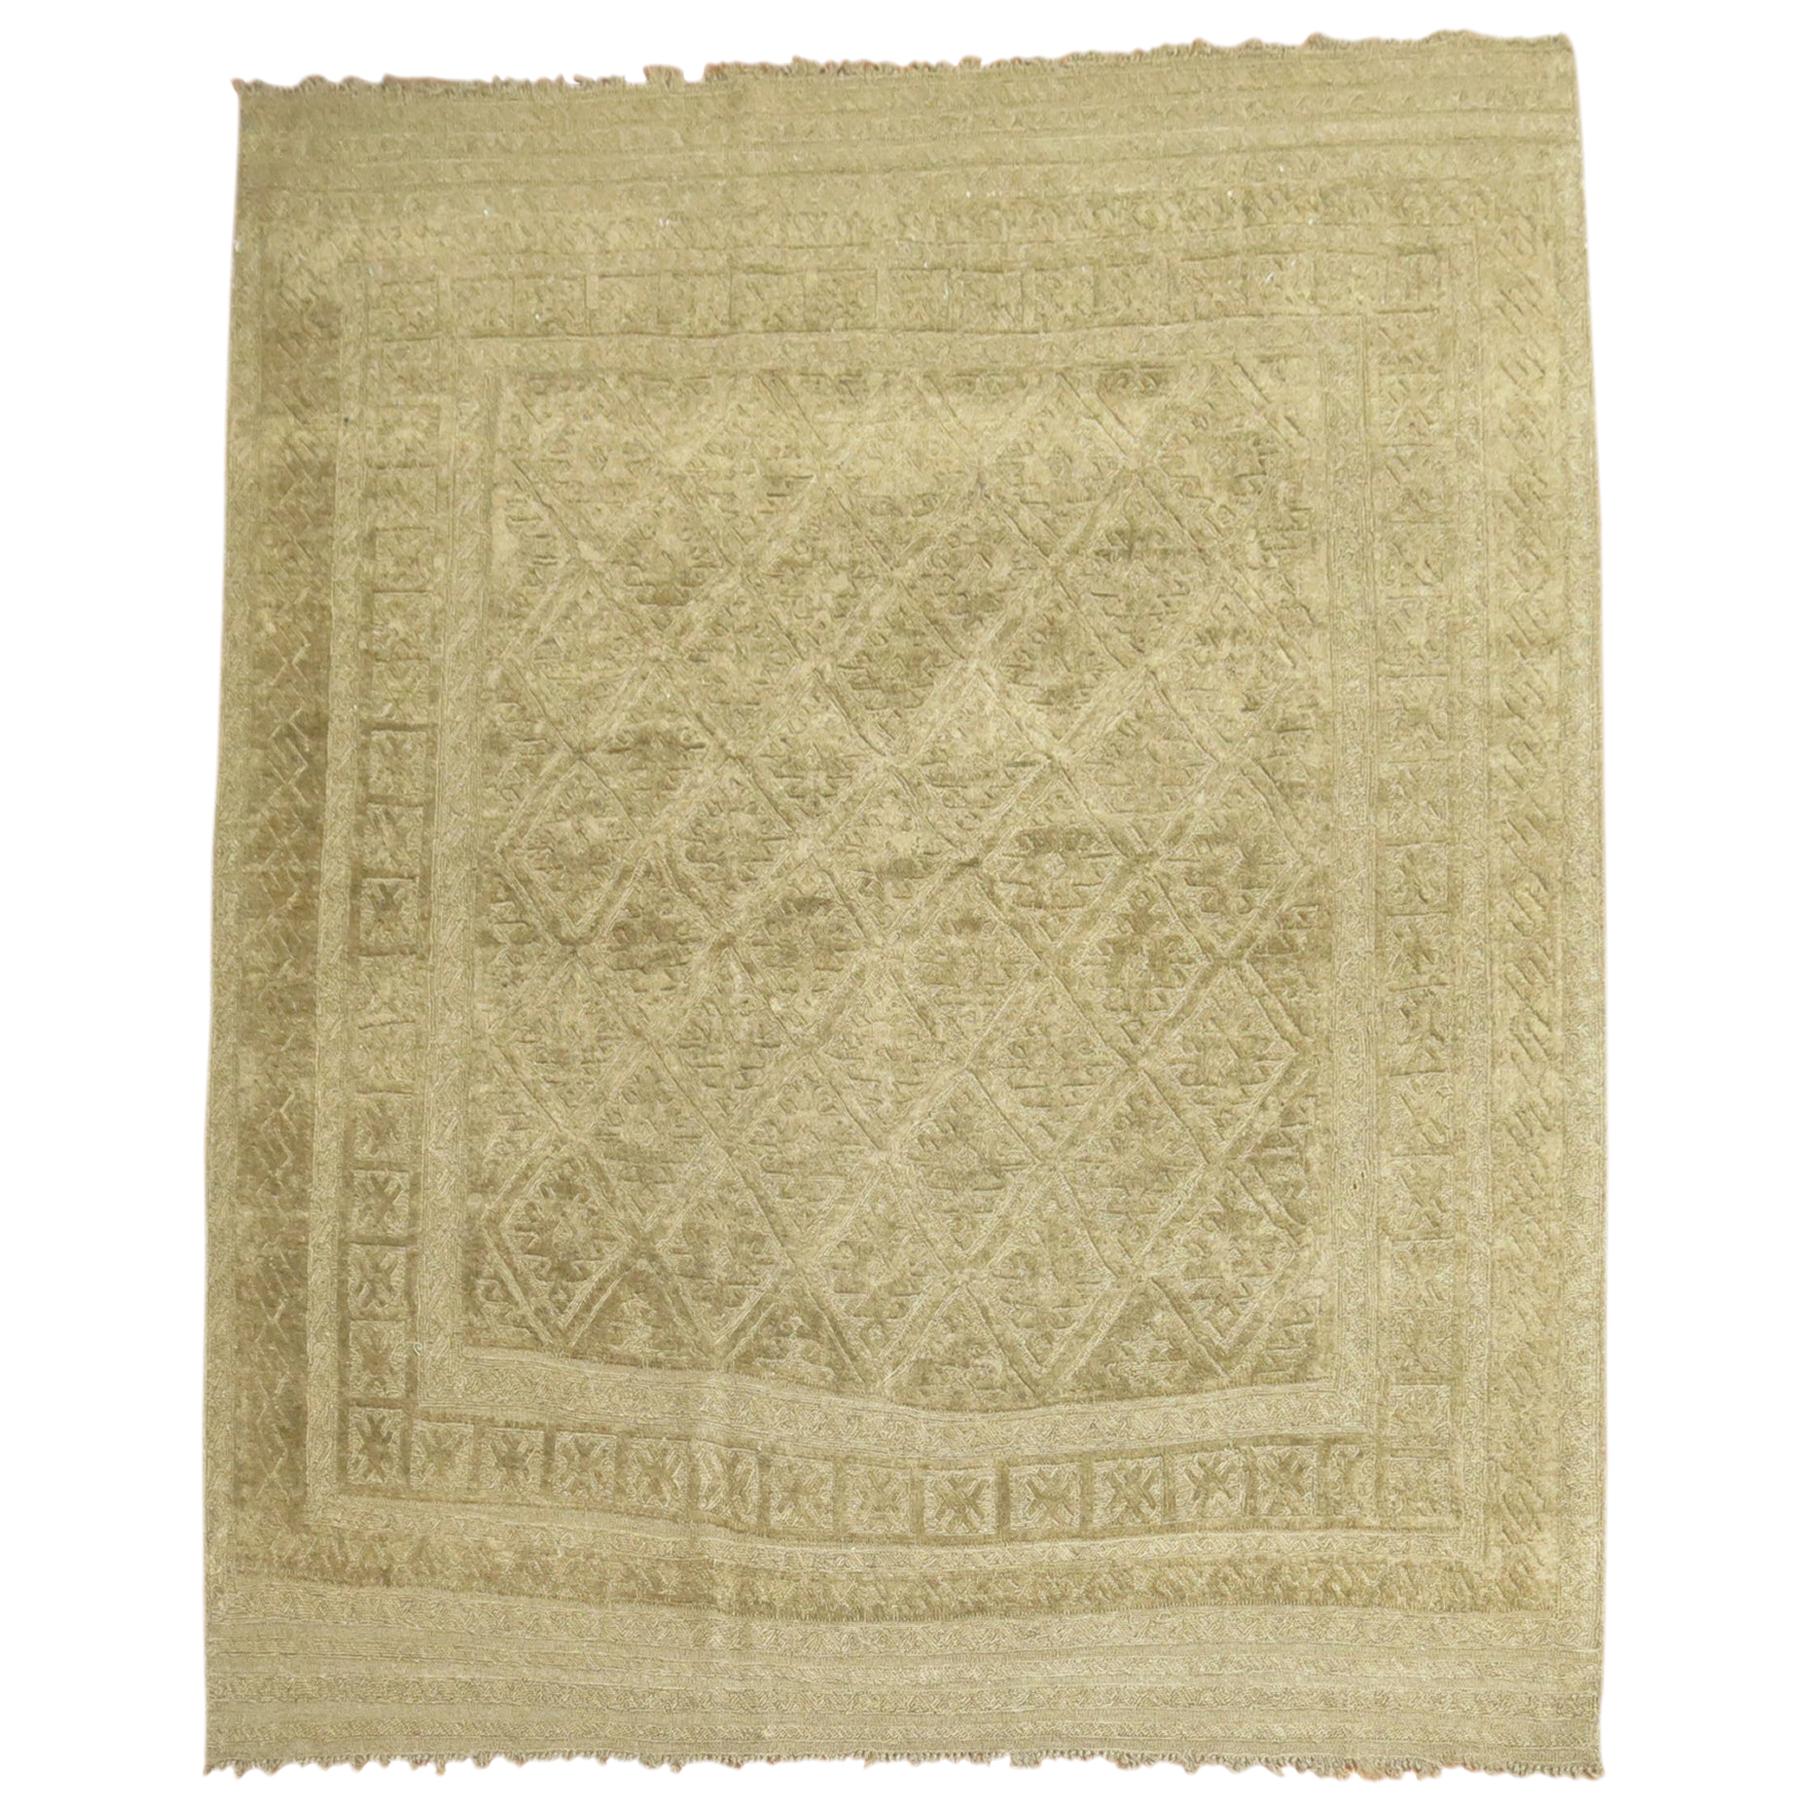 Persischer Souf Jajim-Teppich aus der Zabihi-Kollektion